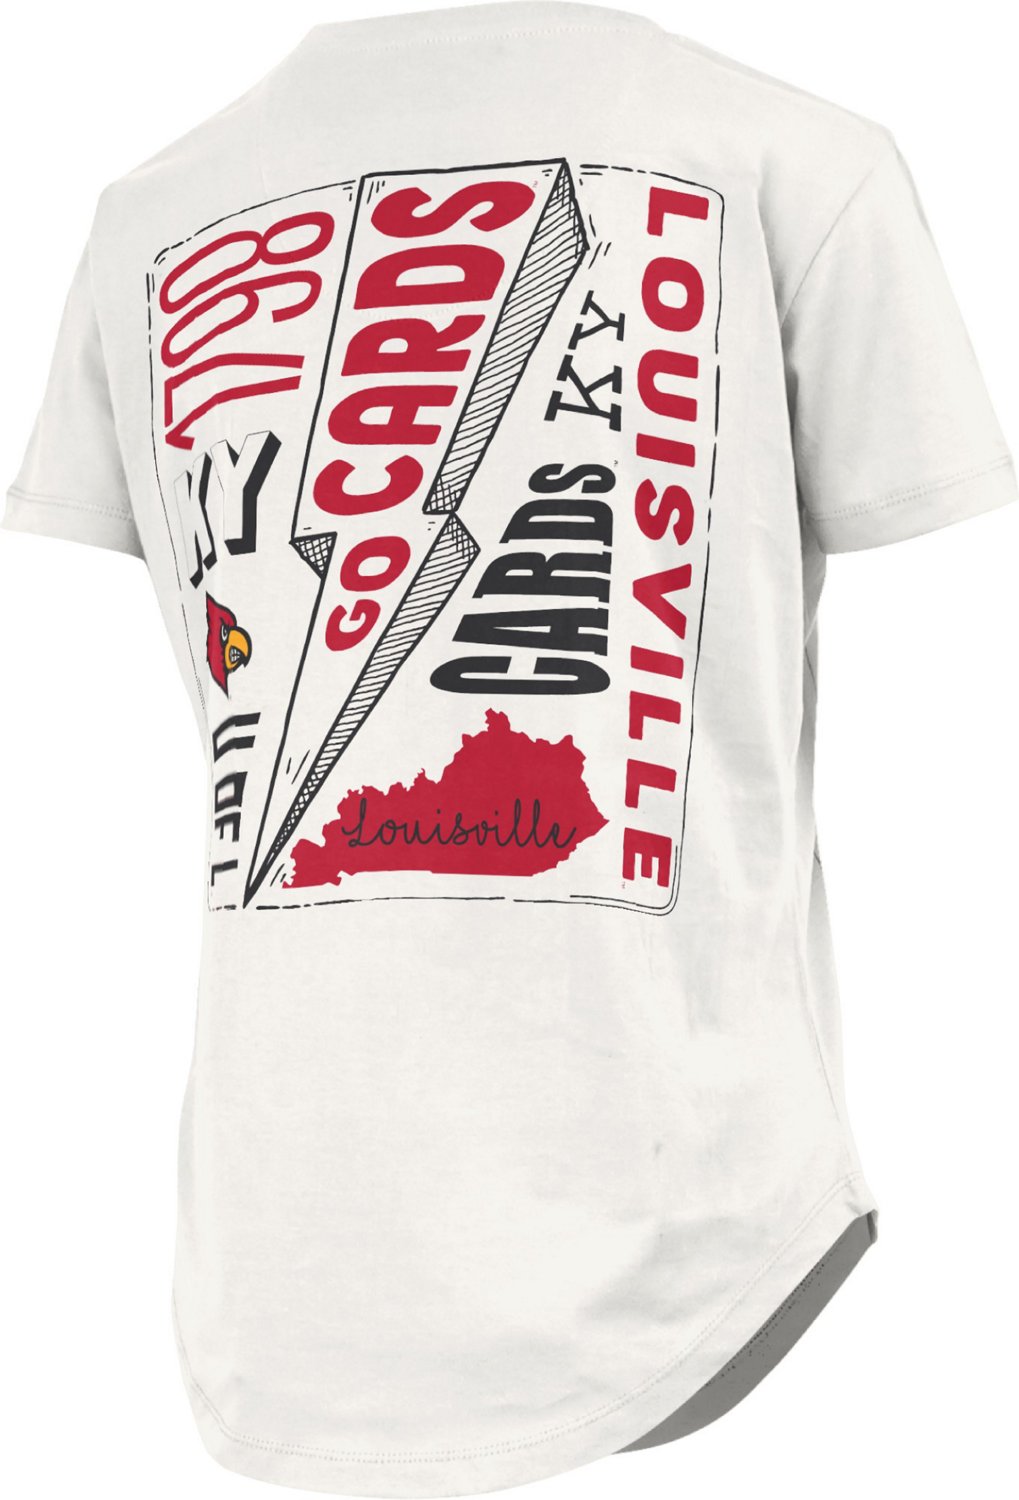 University of Louisville Women's Short Sleeve T-Shirt | Adidas | White | Medium